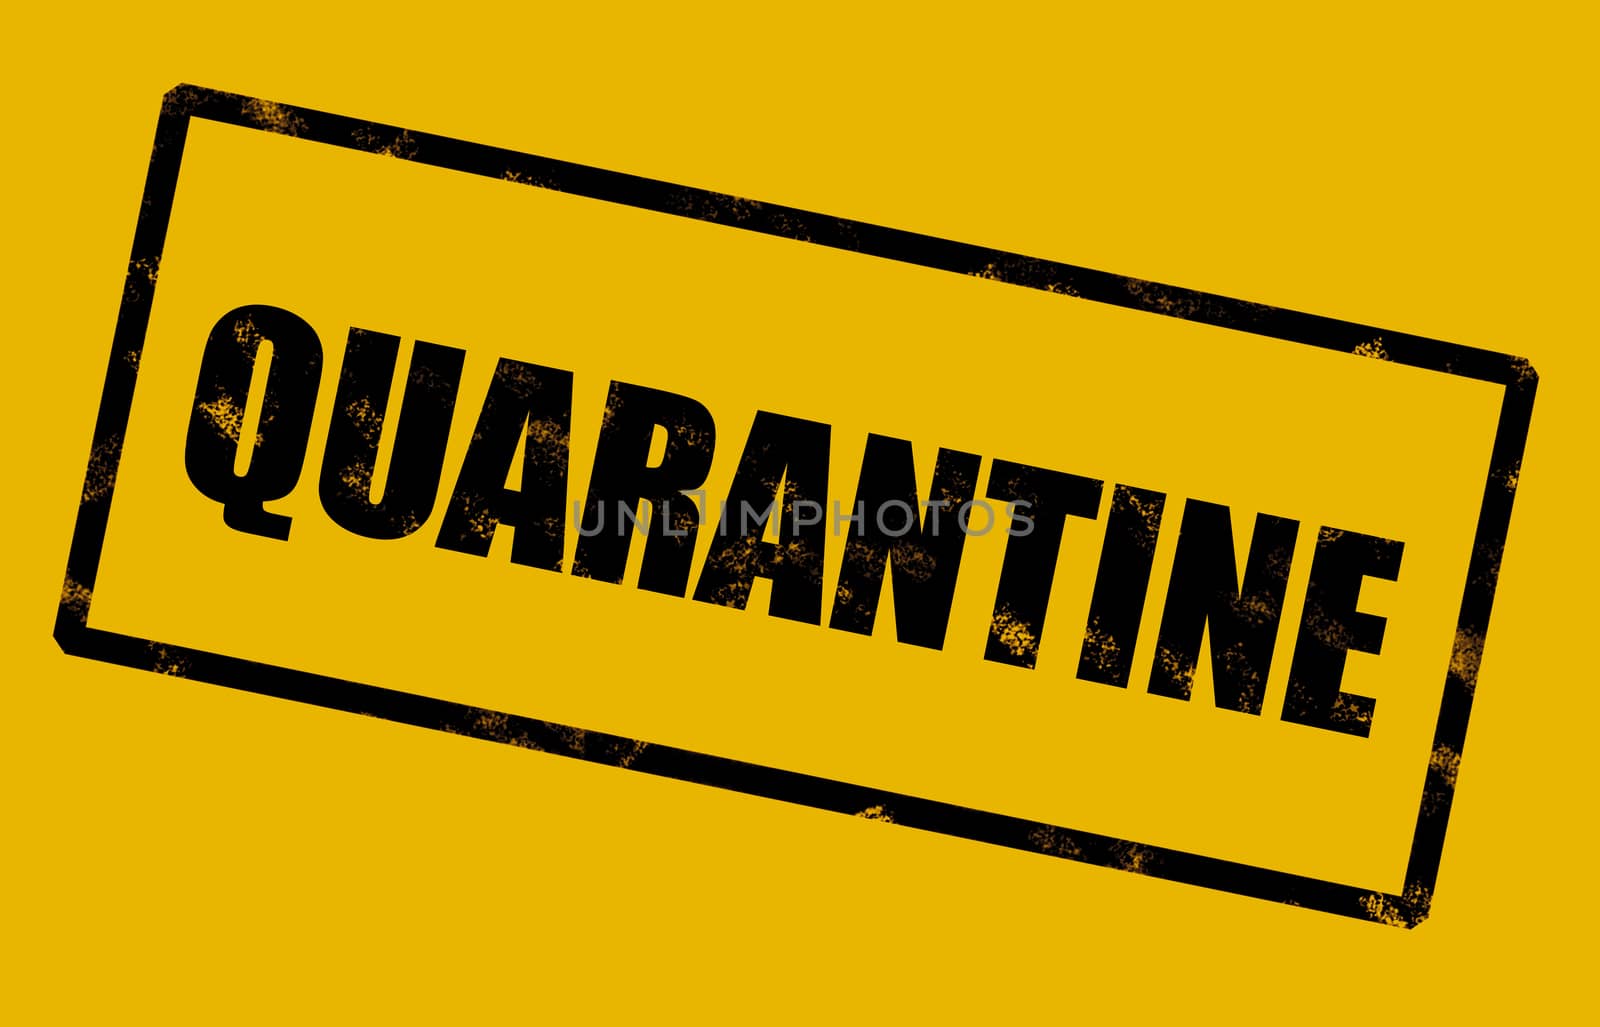 Quarantine warning sign text on yellow background for COVID-19 Coronavirus isolation caution sign by Maridav